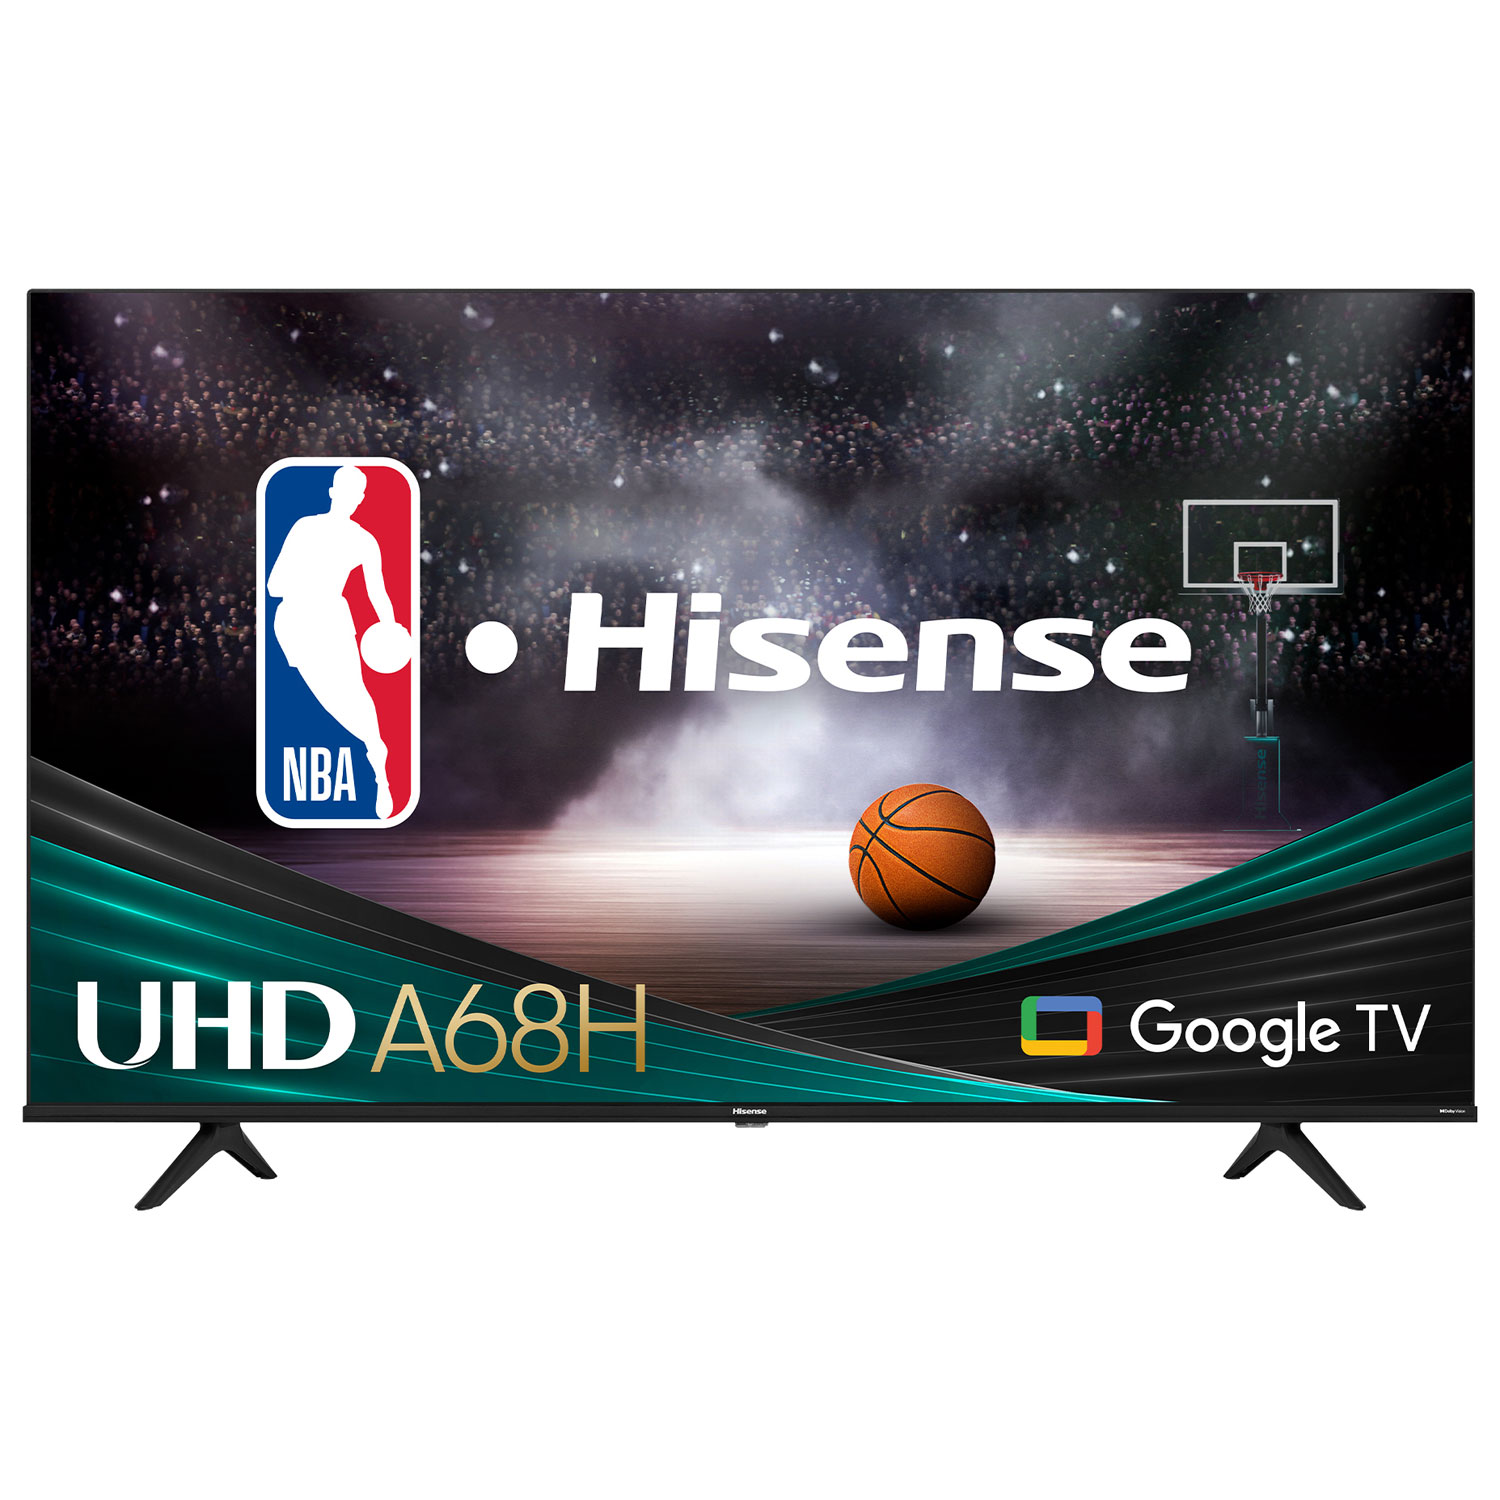 Hisense A68H 50" 4K UHD HDR LCD Smart Google TV (50A68H) - 2022